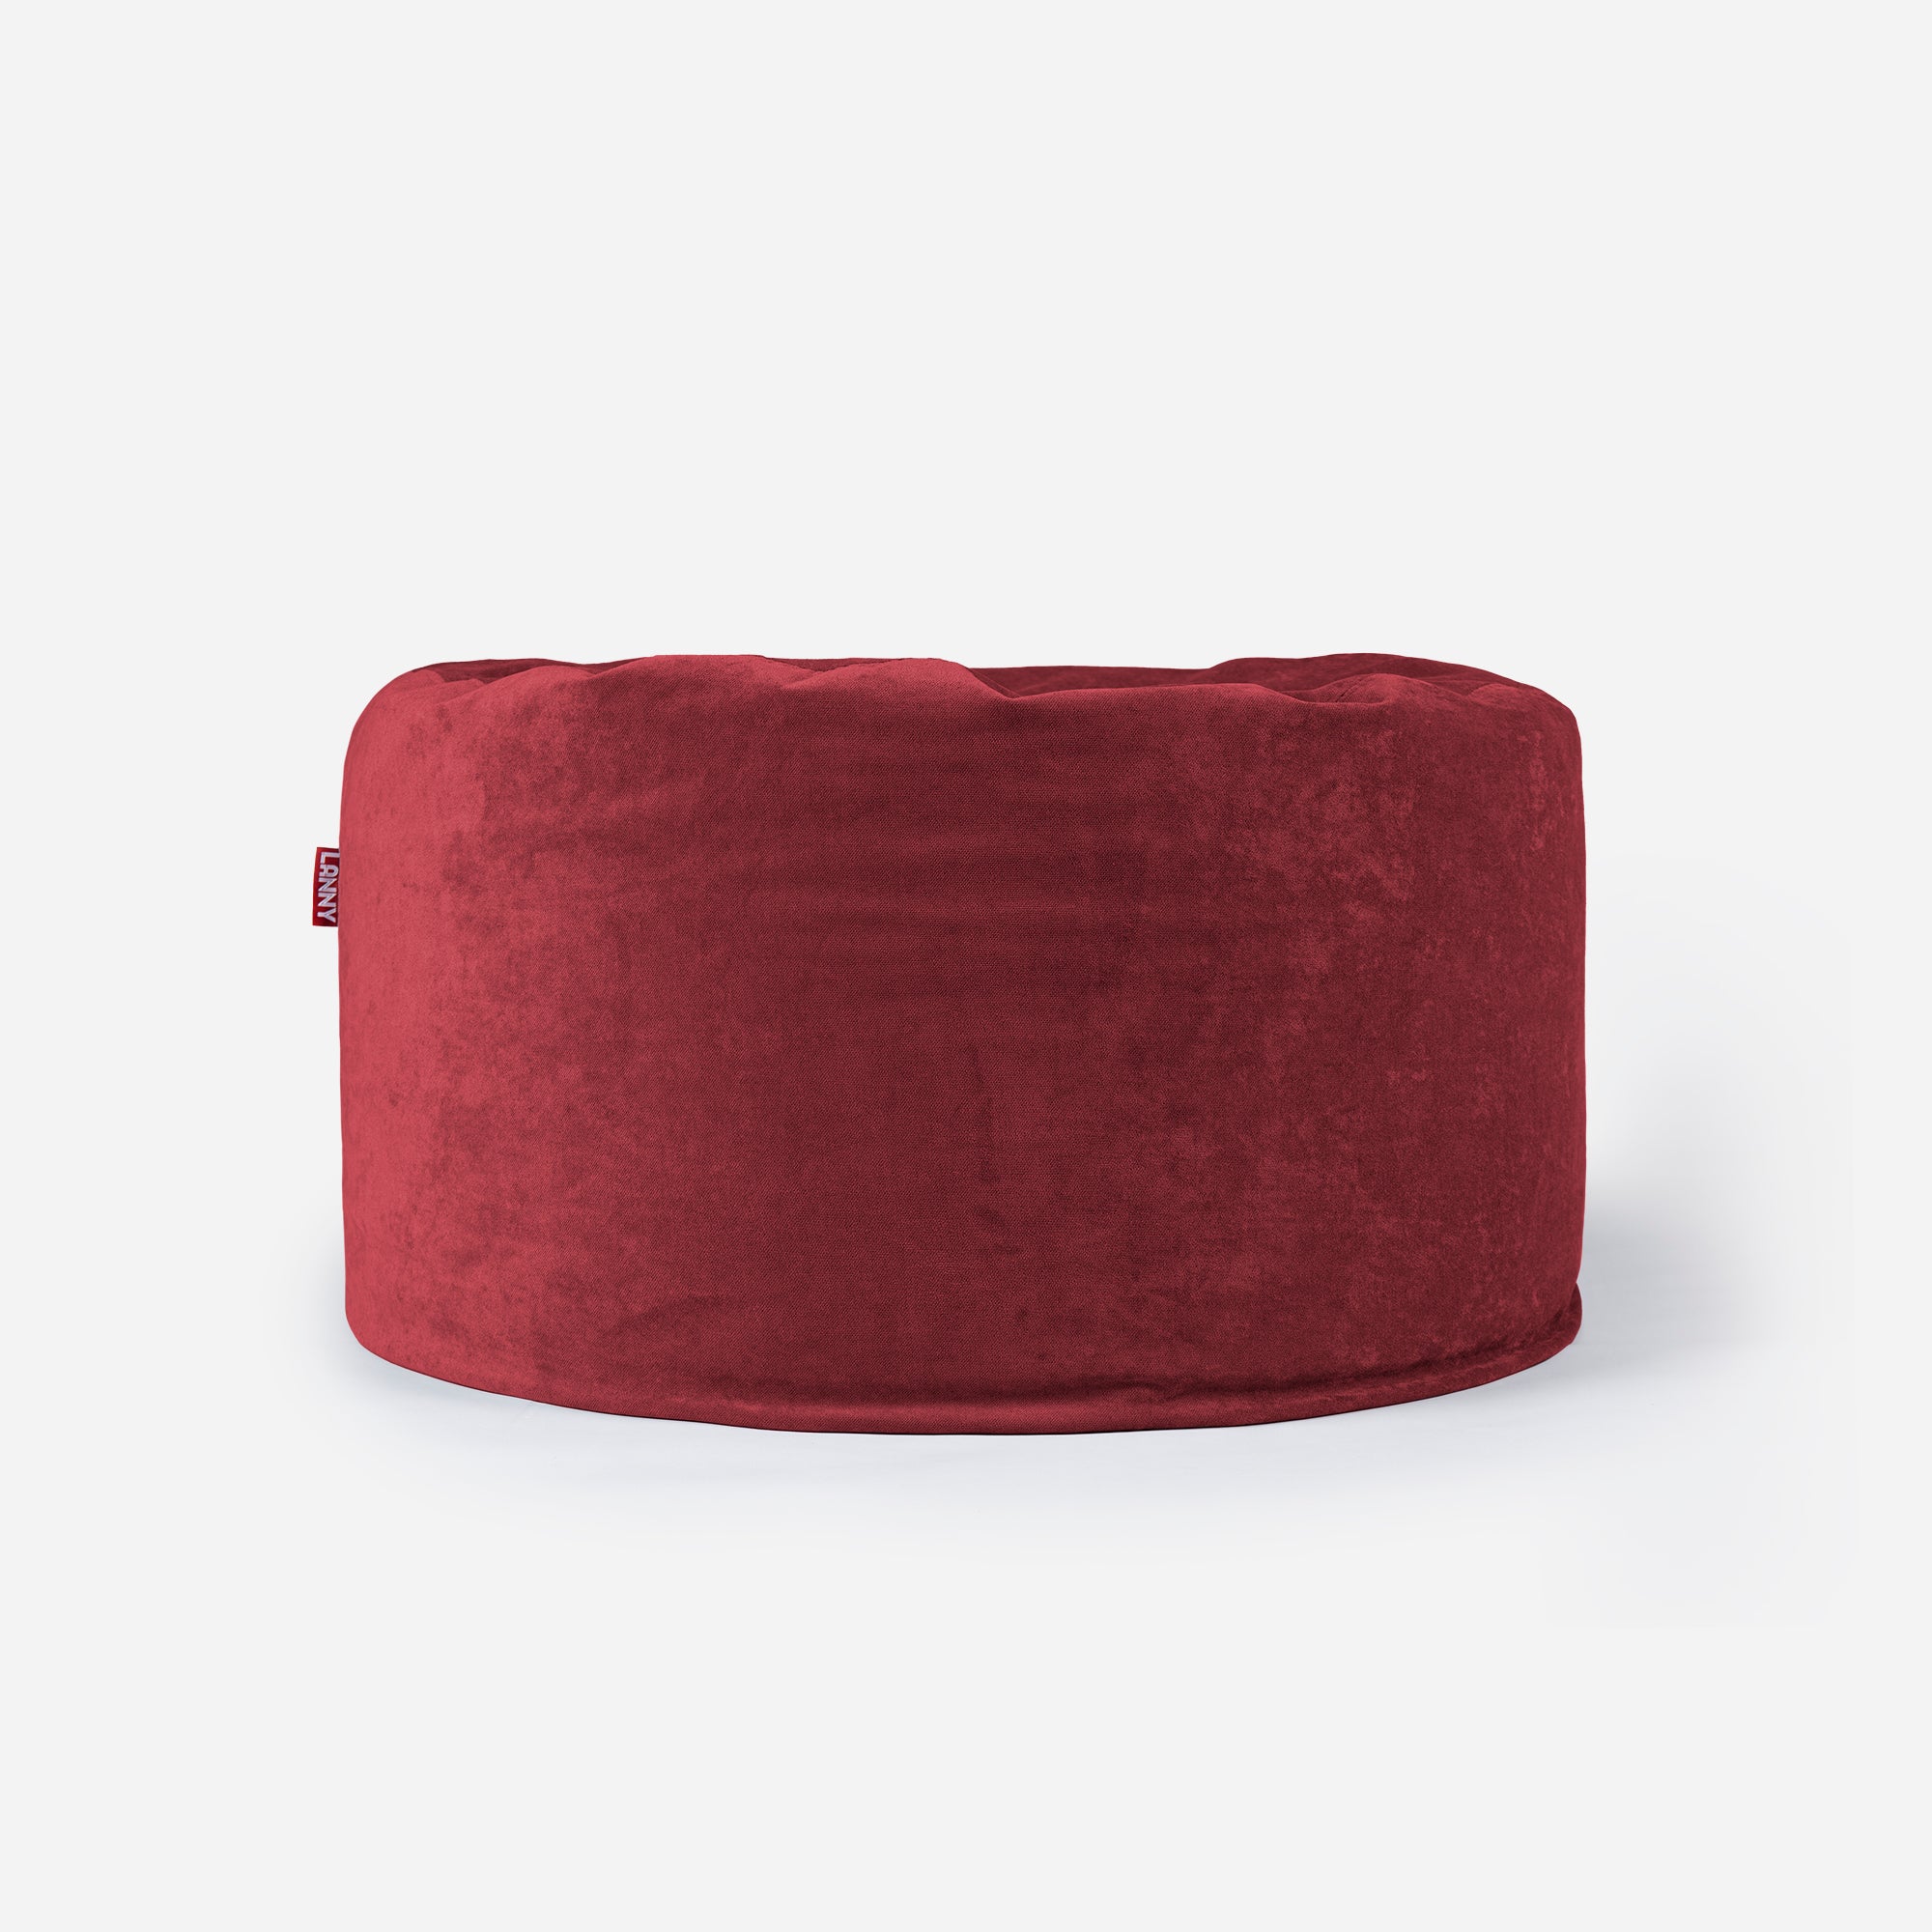 Medium Original Aldo Red Bean Bag